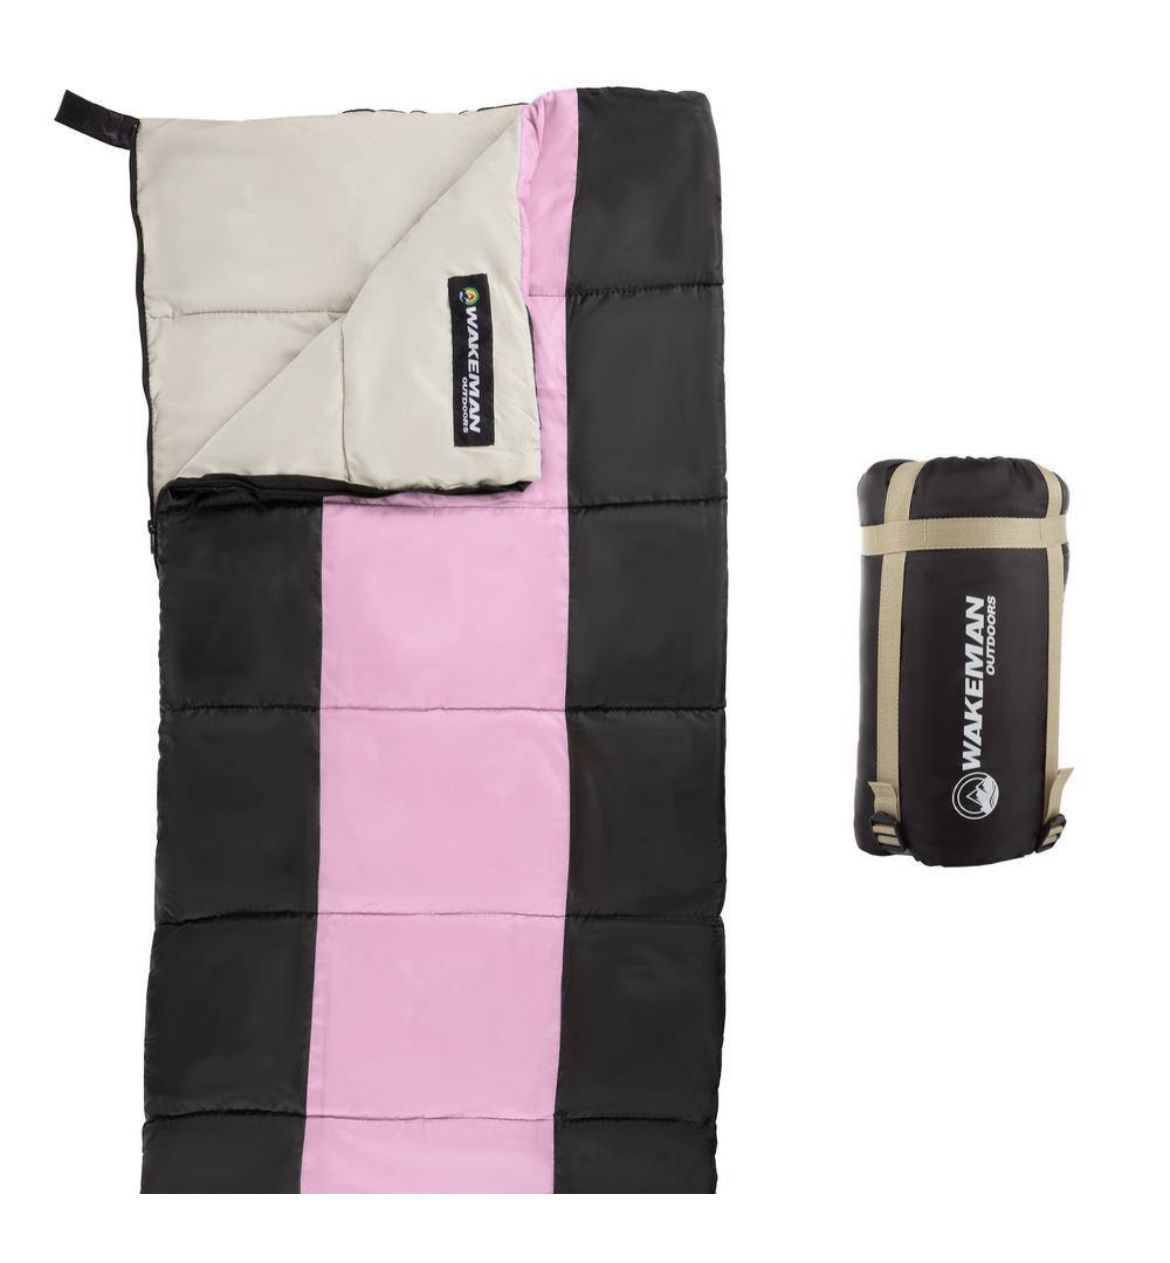 Kids Lightweight Sleeping Bag with Carrying Bag and Compression Straps - Bolsa de dormir